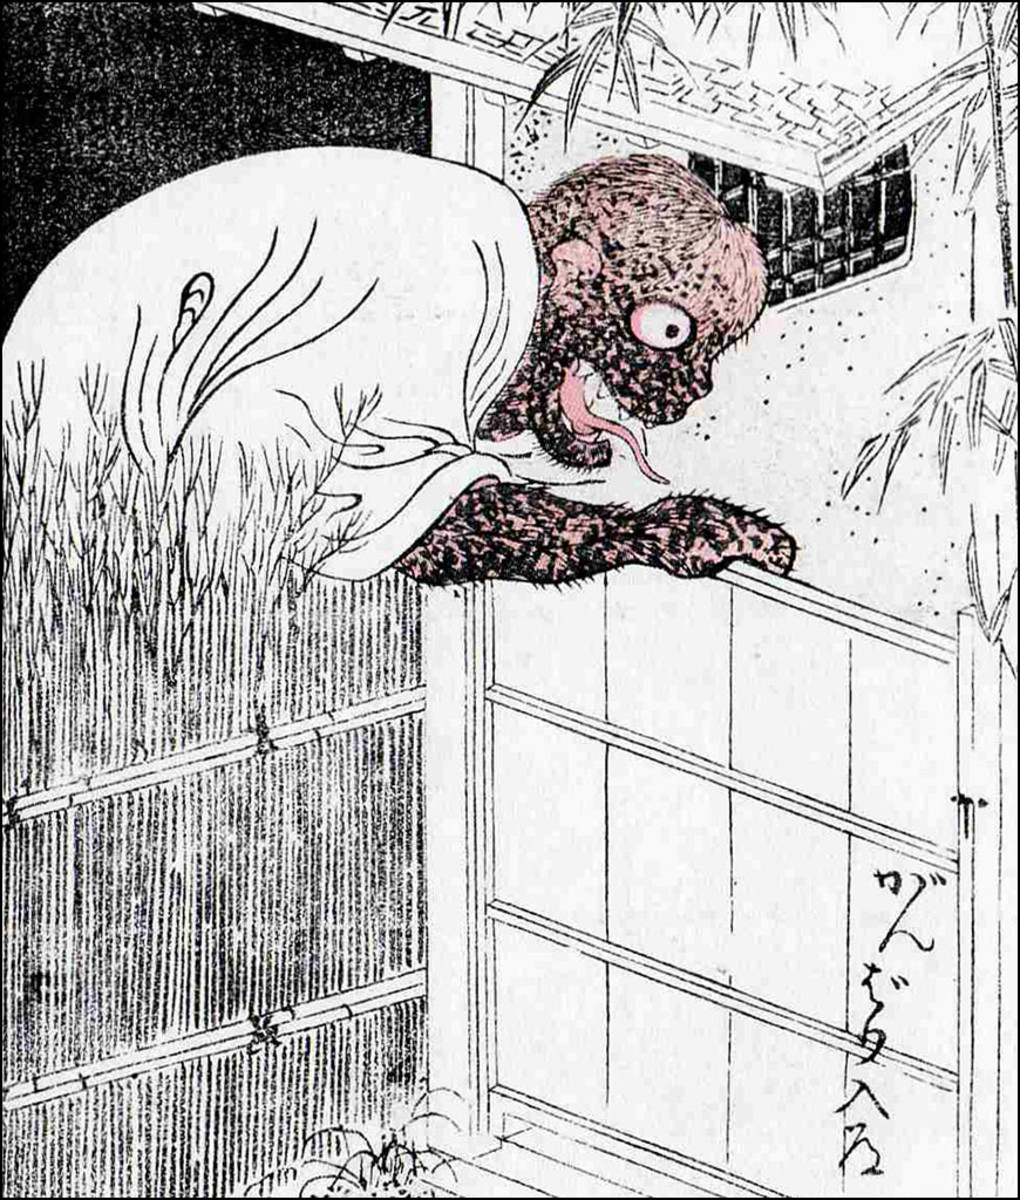 One wonders whether the Kanbari Nyūdō goes “Sukiiiiiii …,” or “I Like It!” when peeping.